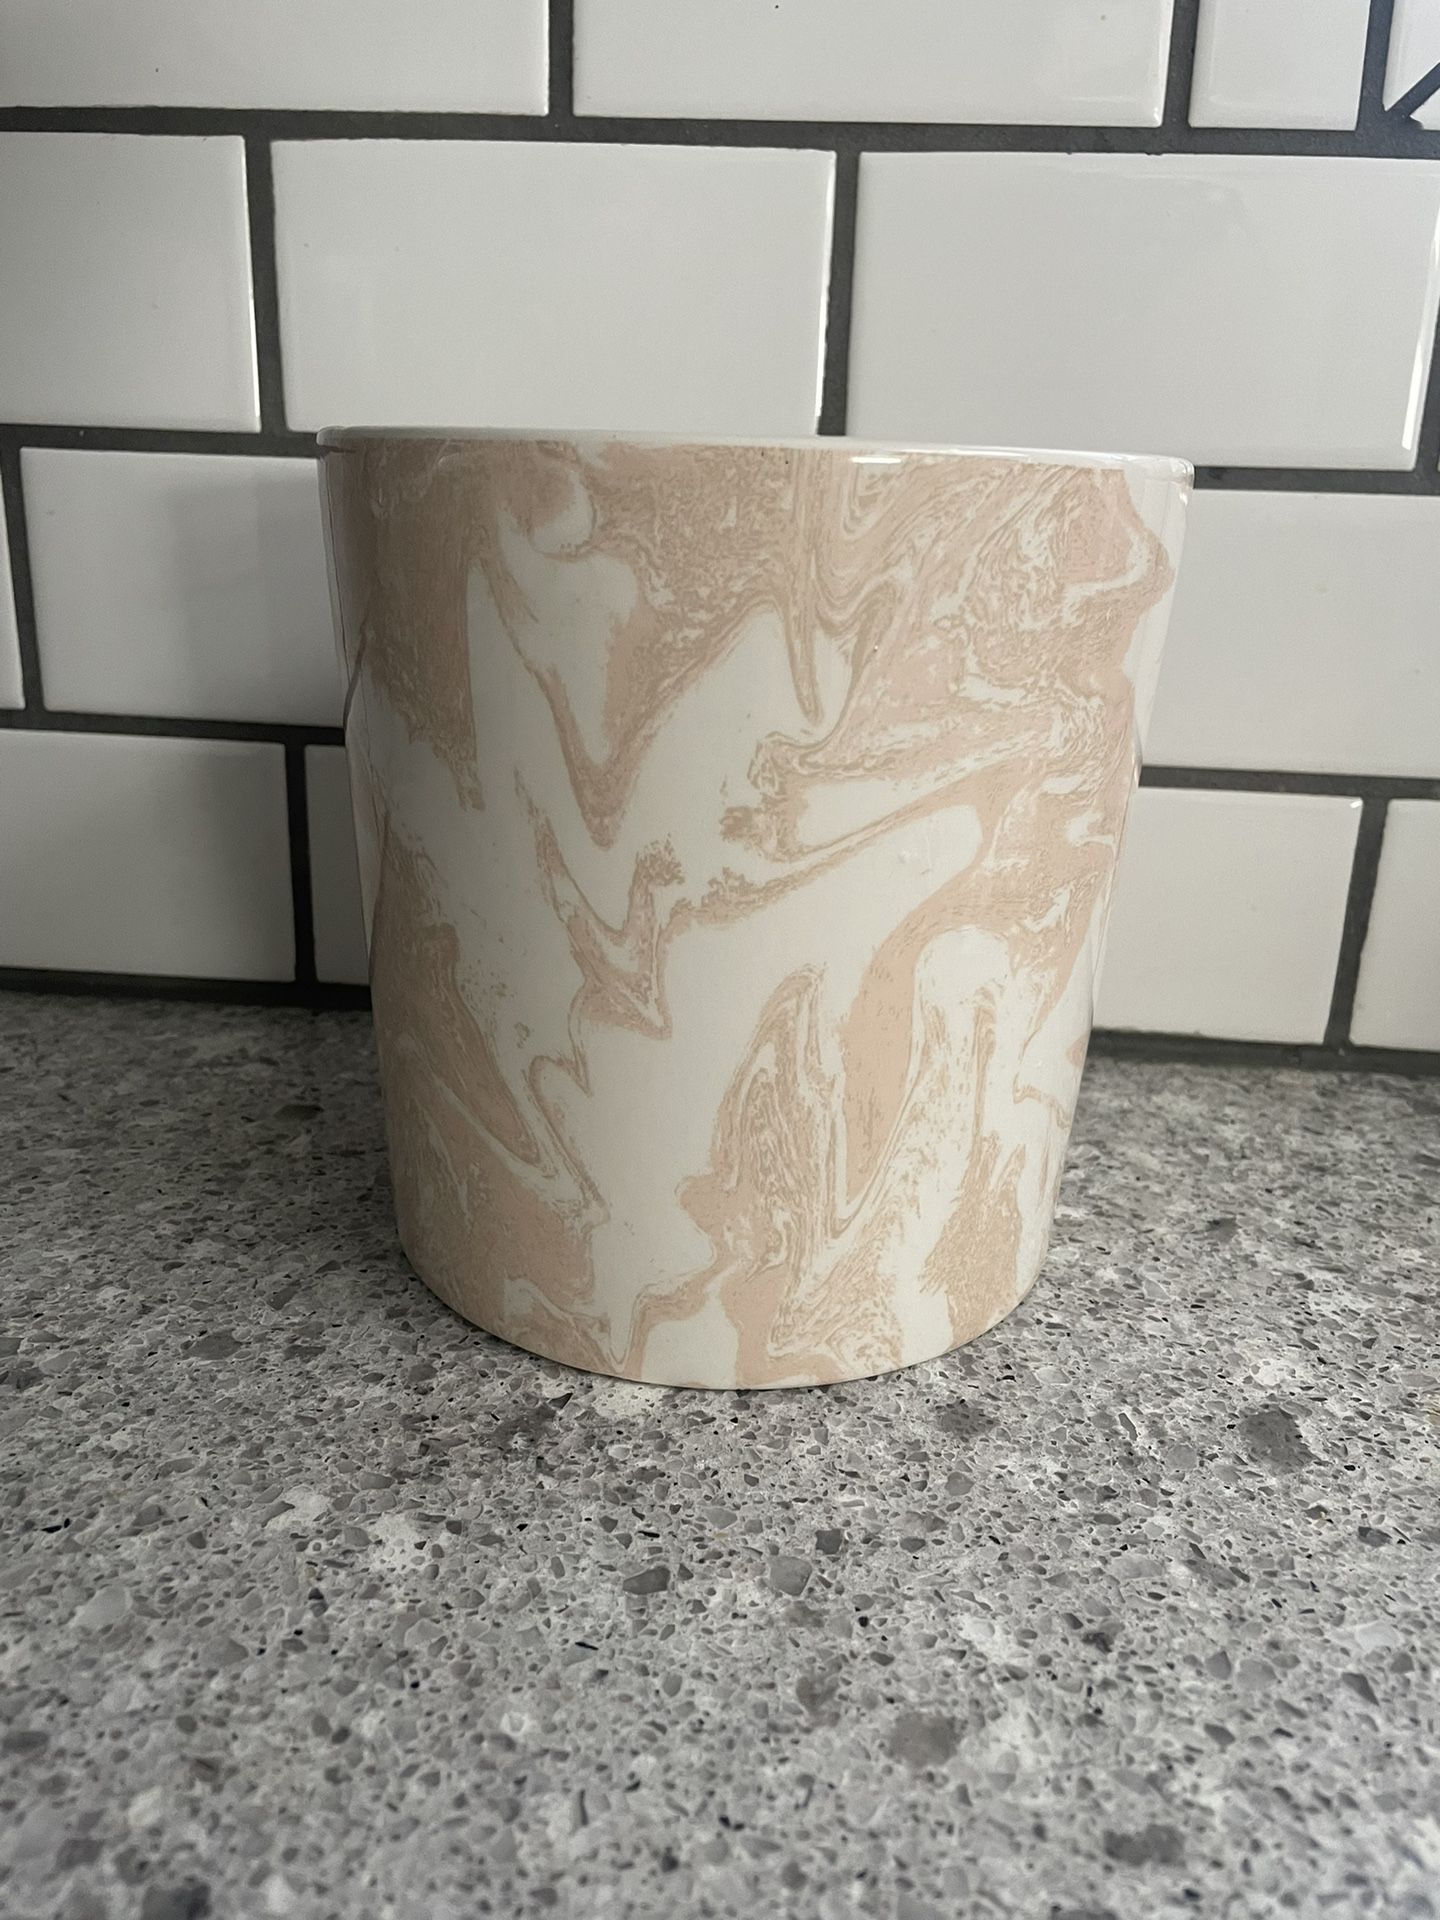 Ceramic Pot With Drain Hole